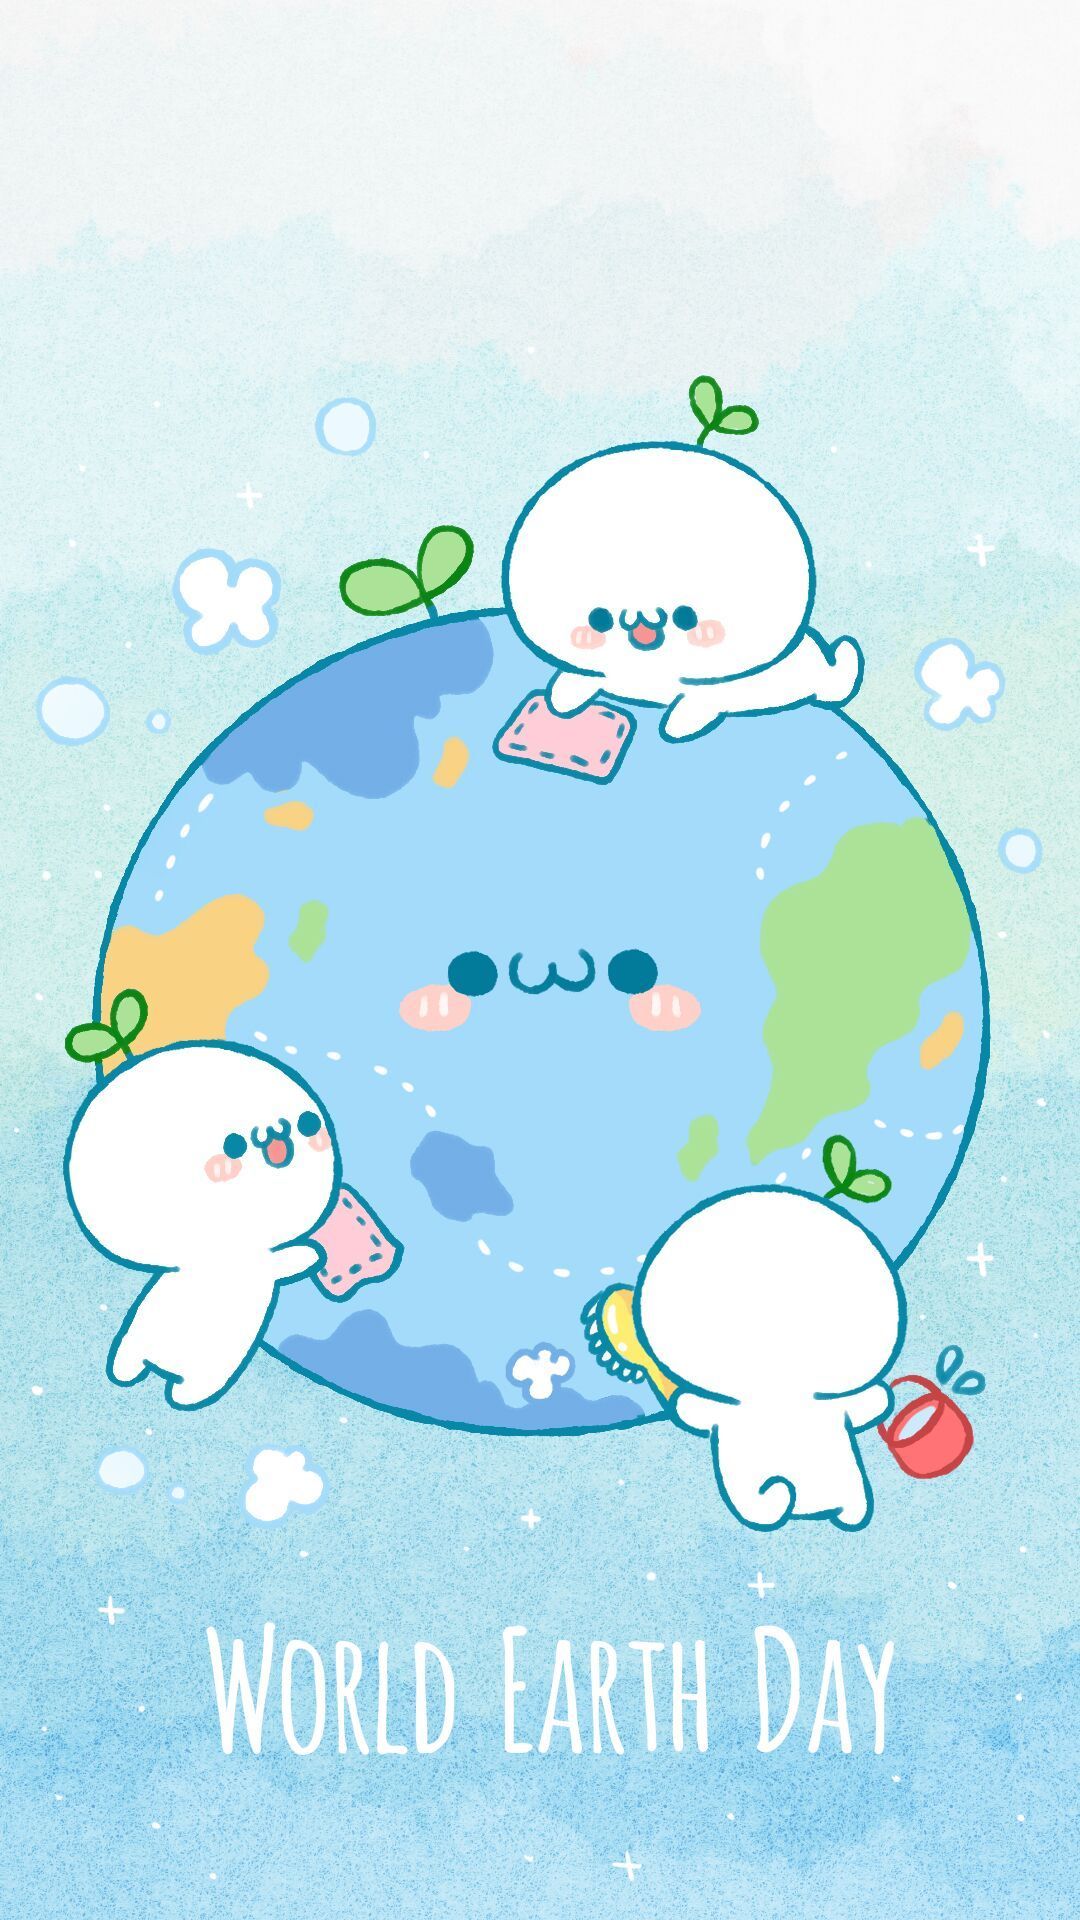 A cute cartoon of three little animals on the earth - Earth